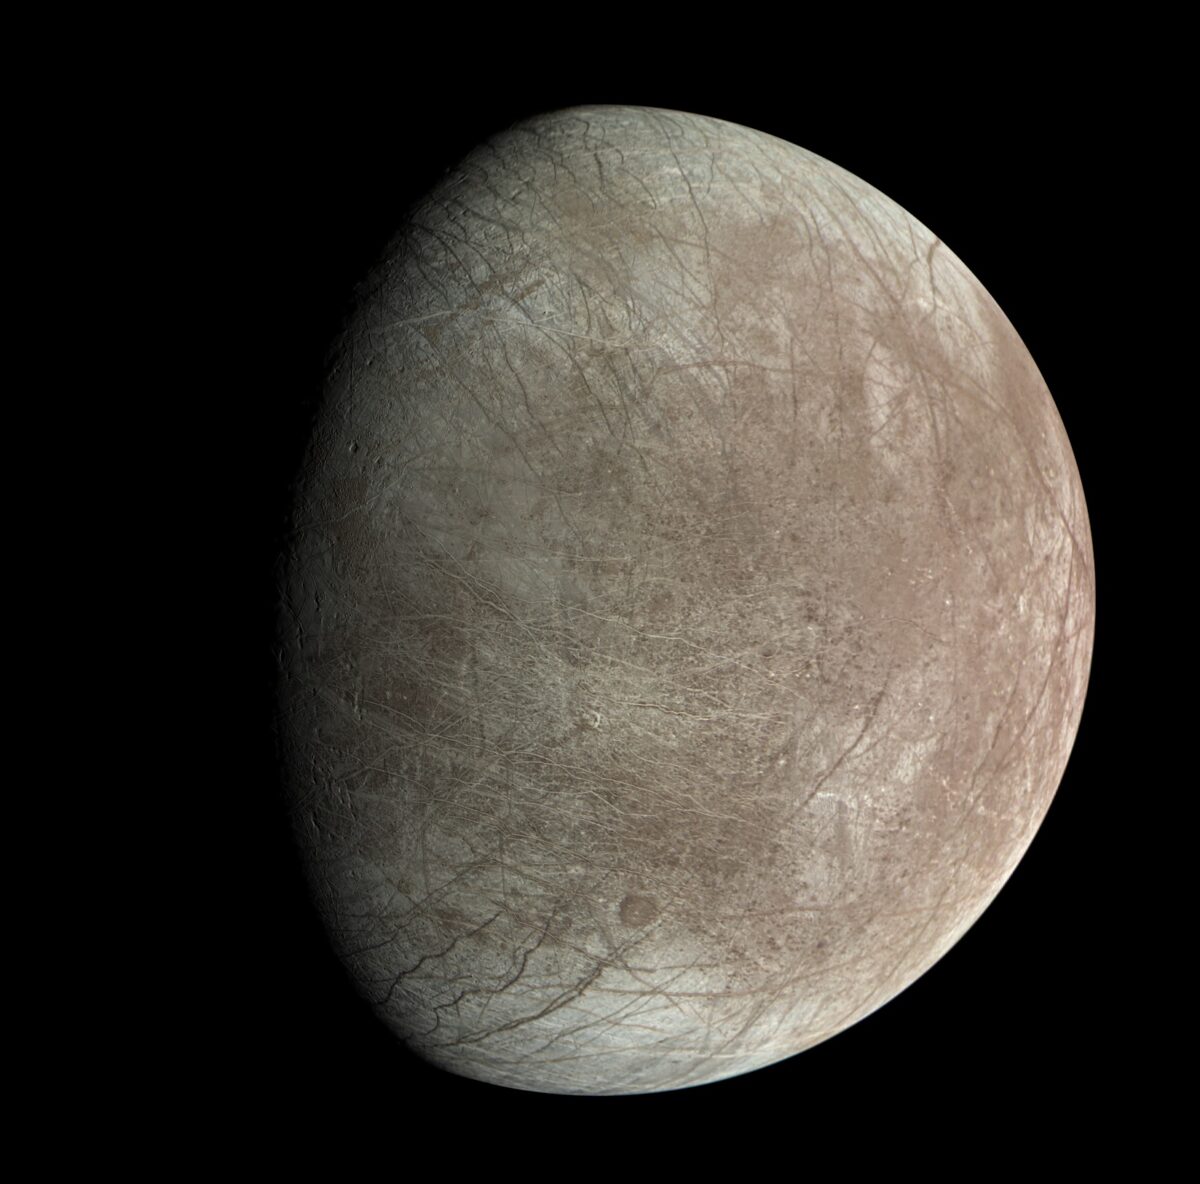 Ледяная луна Юпитера Европа в объективе зонда «Юнона» / © Björn Jónsson (CC BY 3.0)